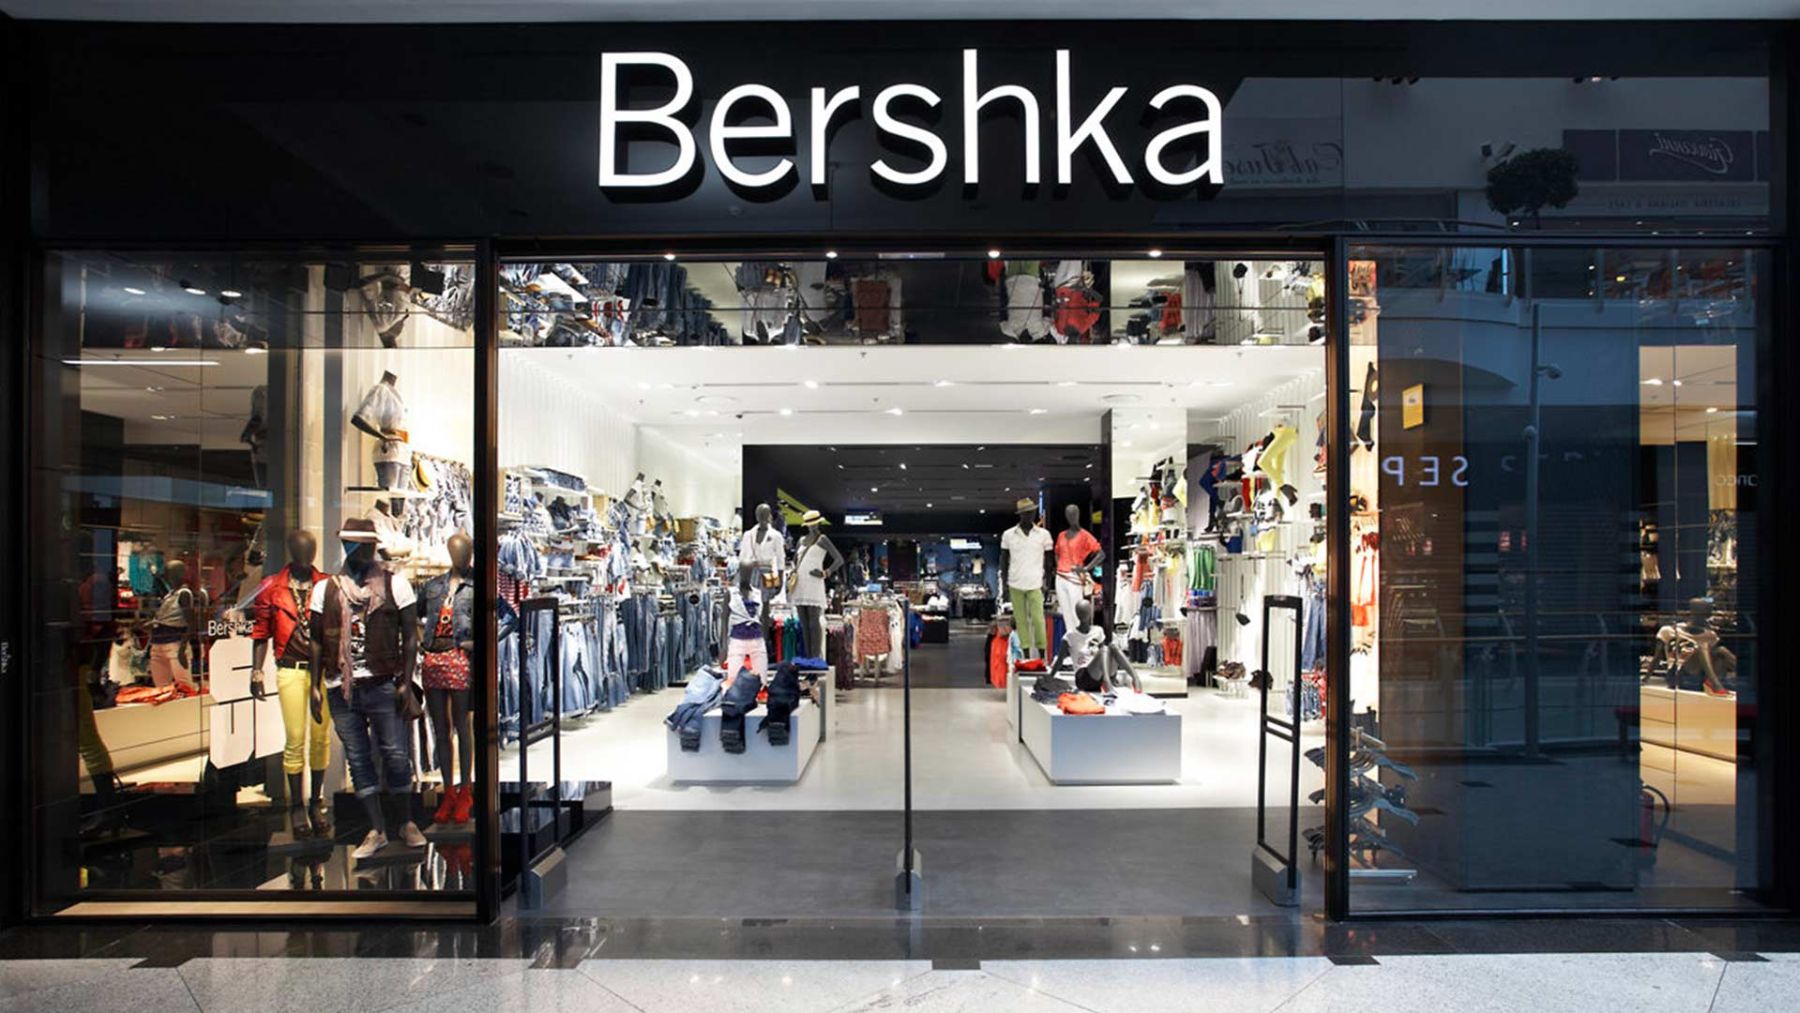 Arriba 68+ imagen de donde es la marca de ropa bershka - Abzlocal.mx